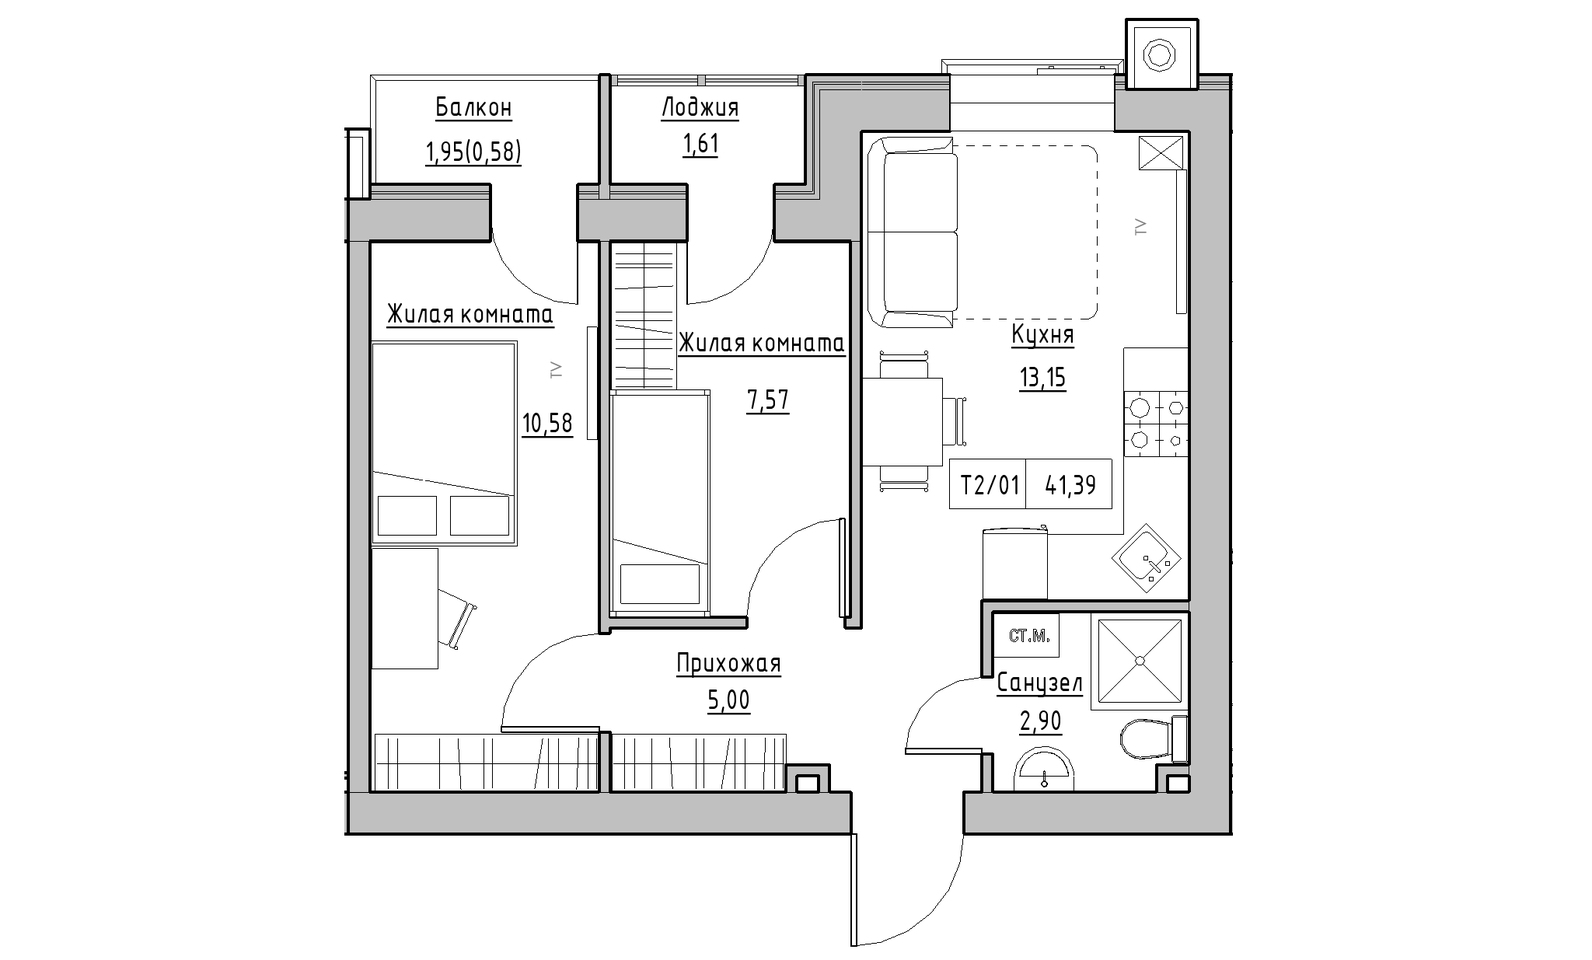 Planning 2-rm flats area 41.39m2, KS-014-04/0005.